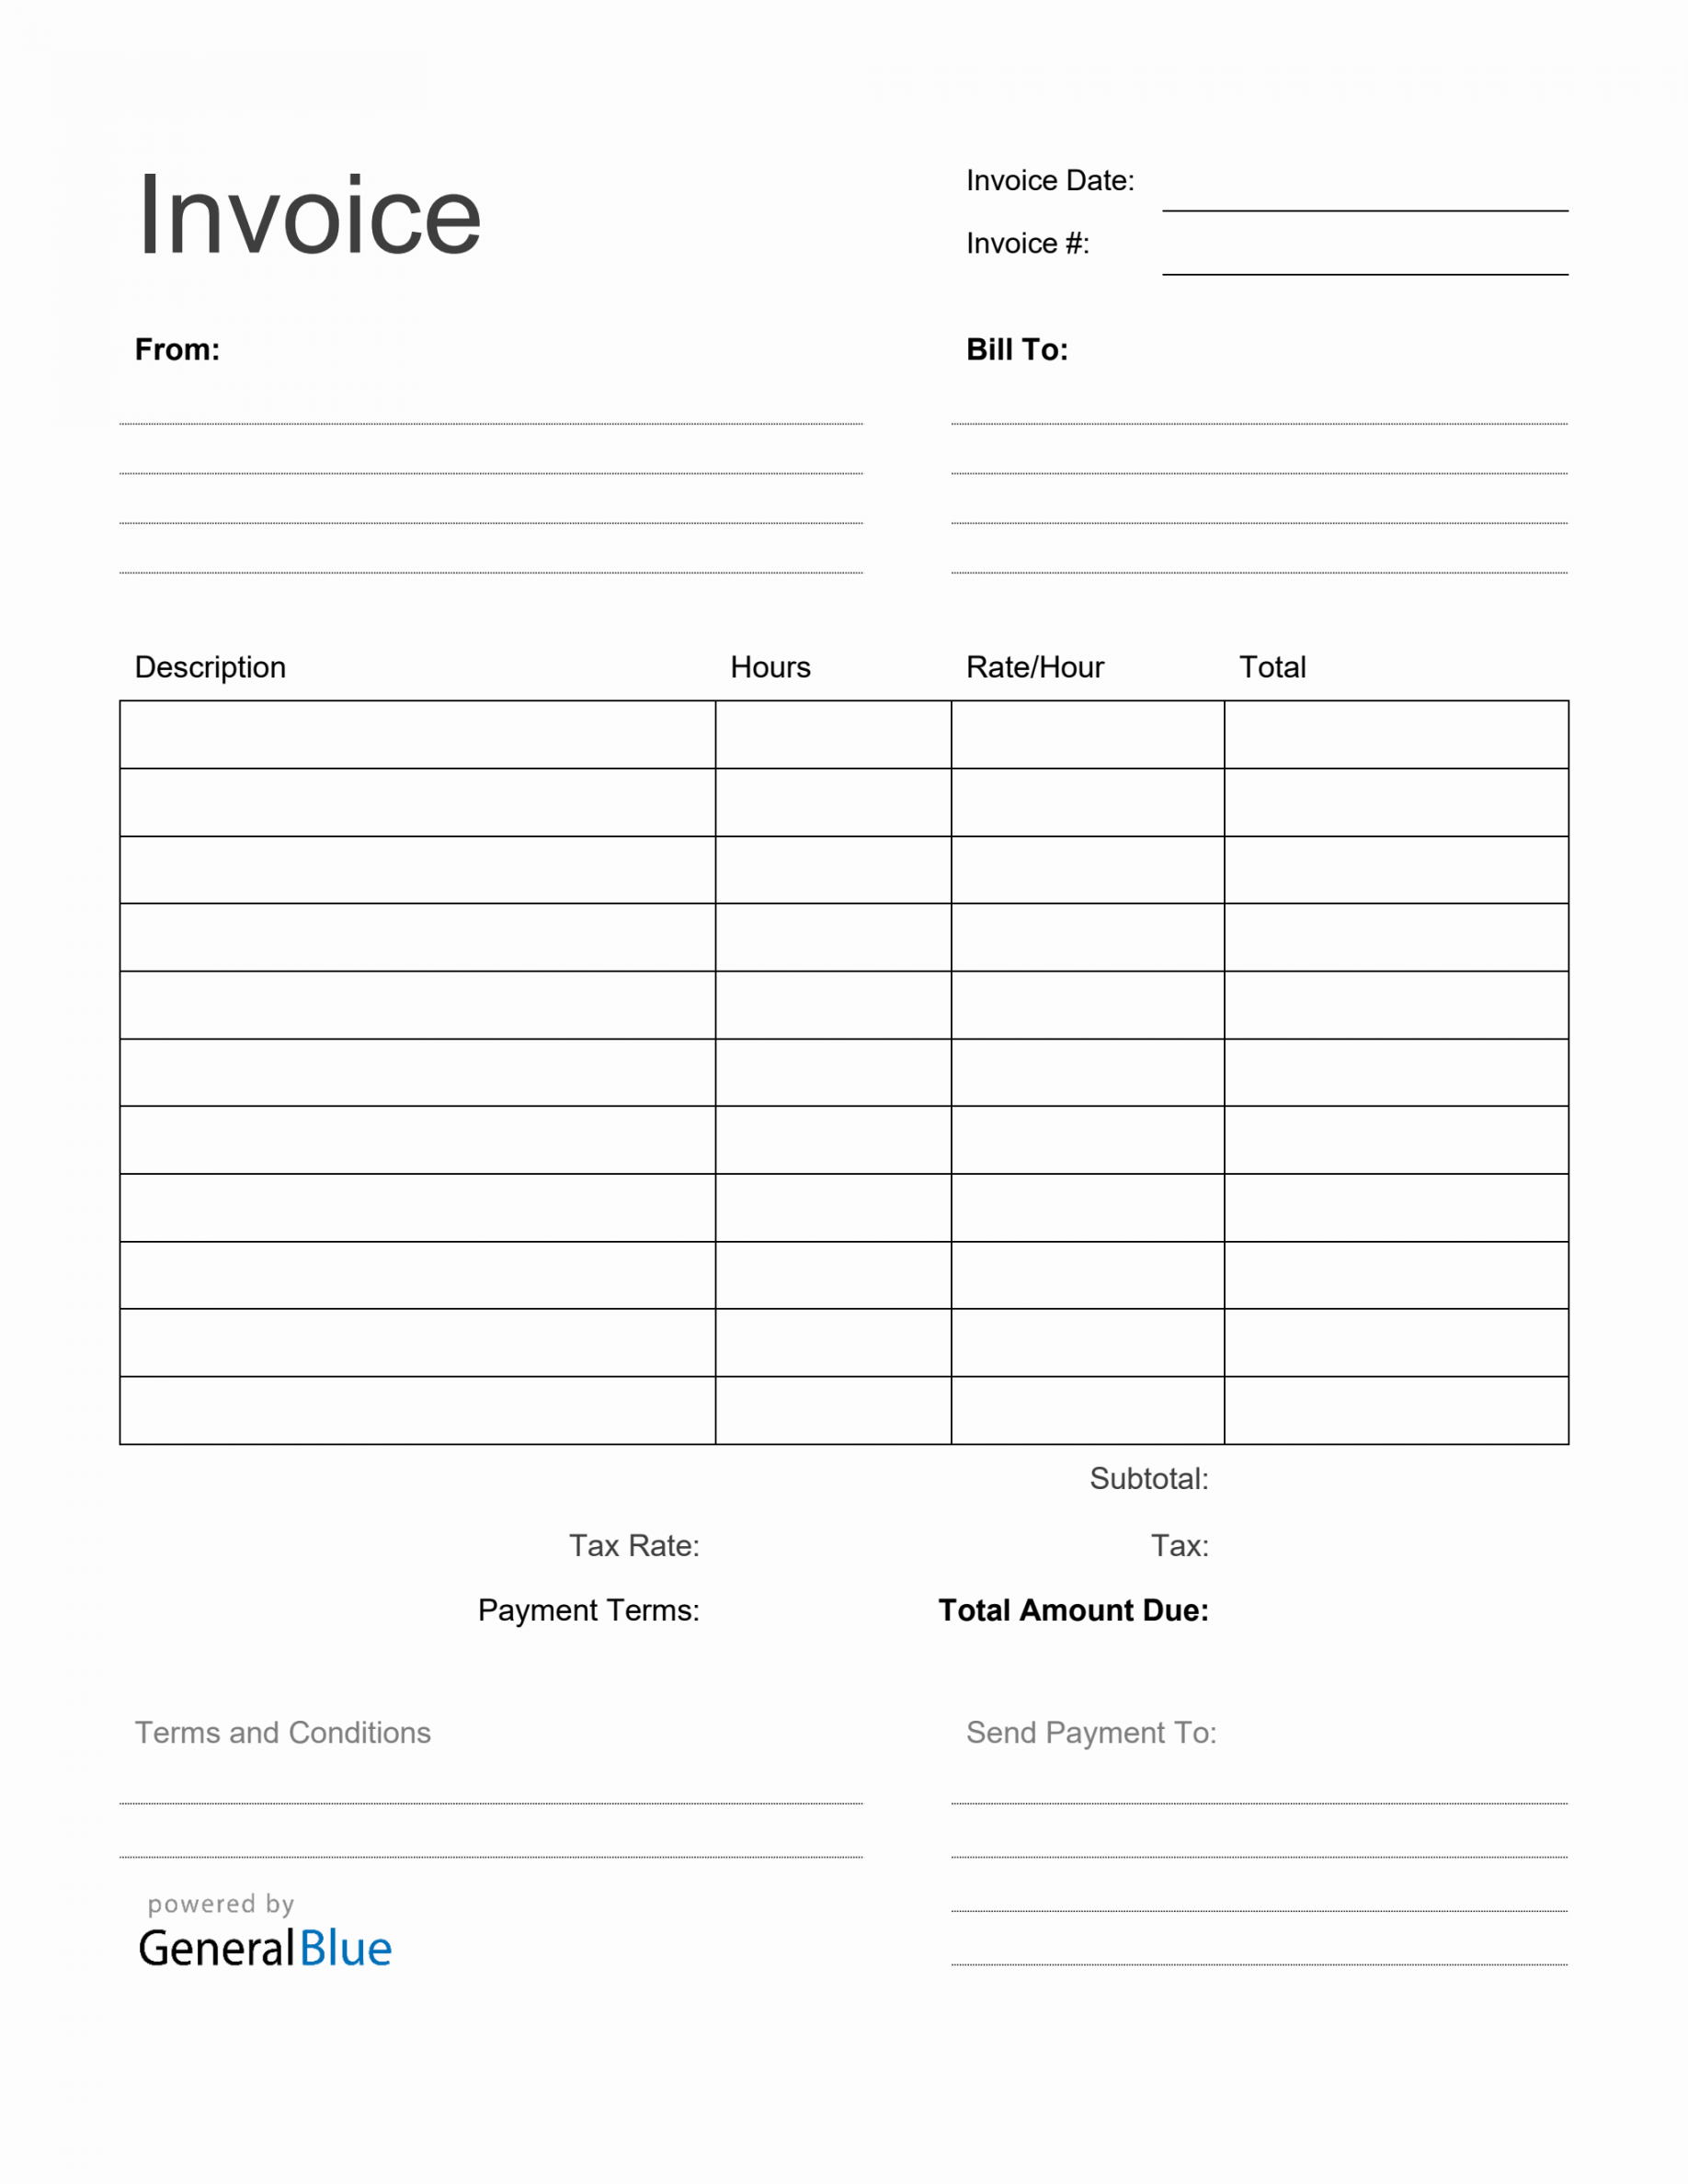 Free Printable Invoice Template - Printable - Blank Invoice Template in Word Printable